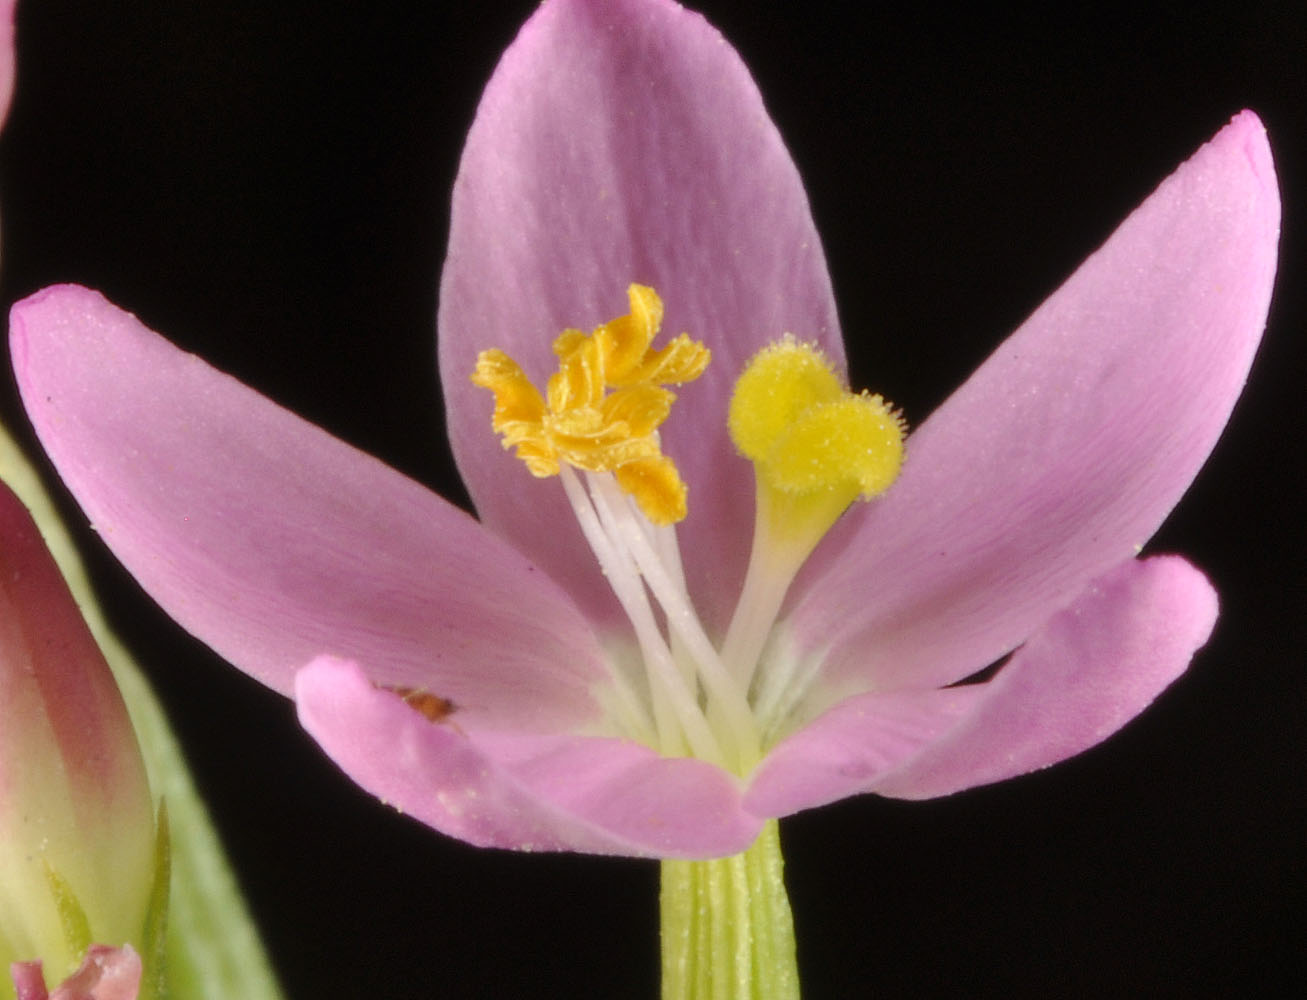 Flora of Eastern Washington Image: Centaurium erythraea